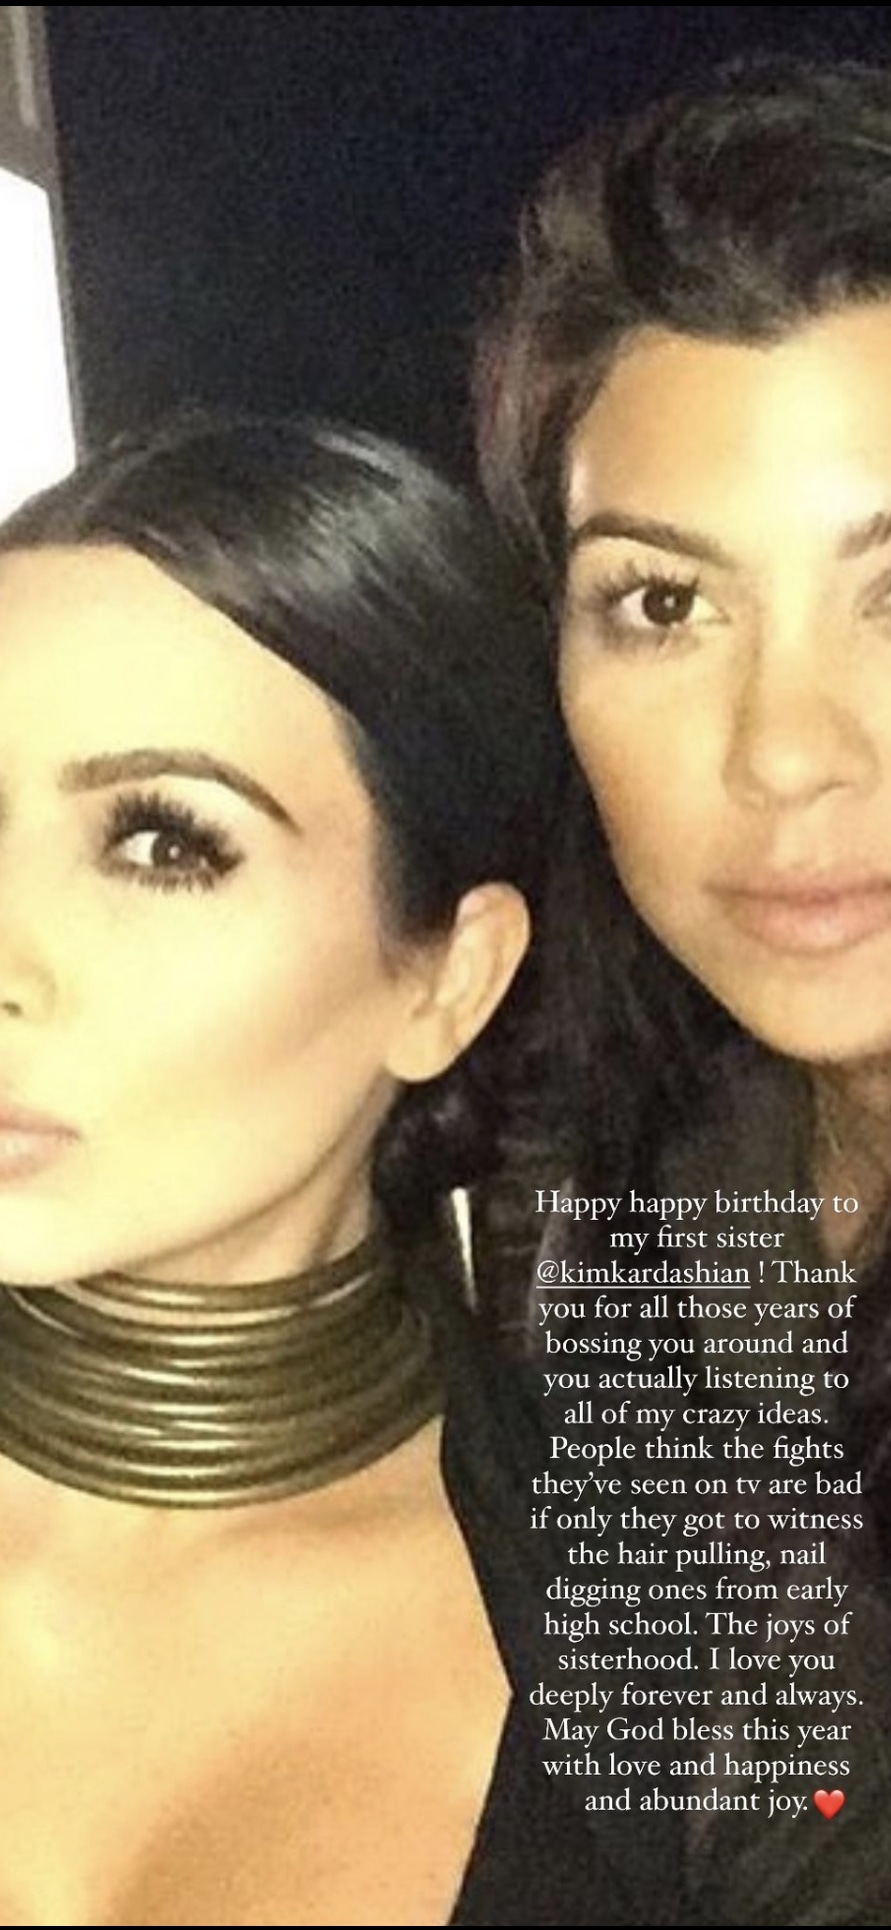 Kourtney Kardashian opened up about her relationship with sister Kim Kardashian